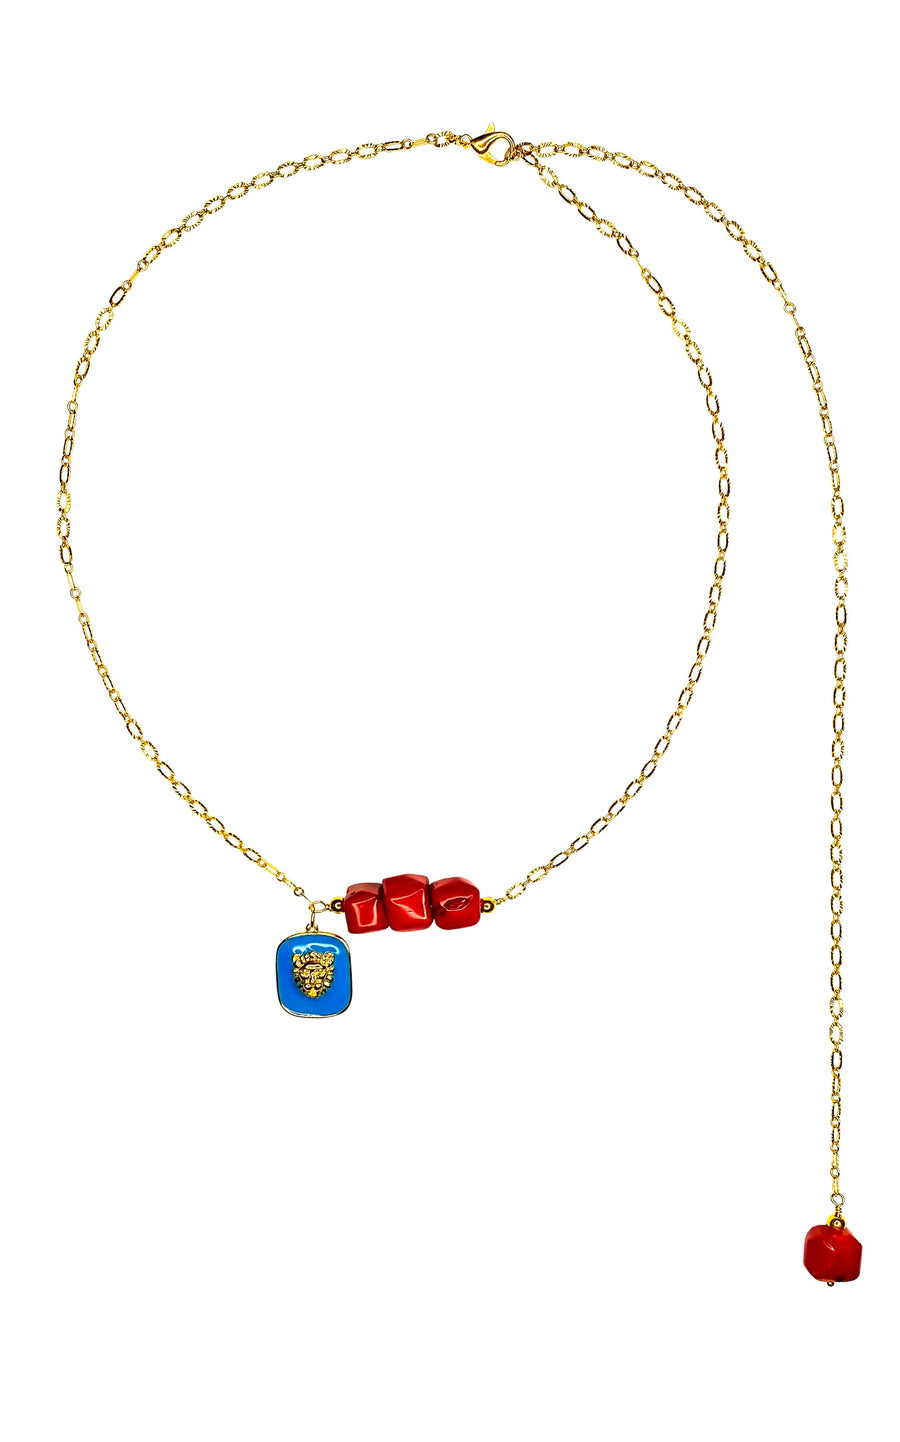 Tiger amulette necklace